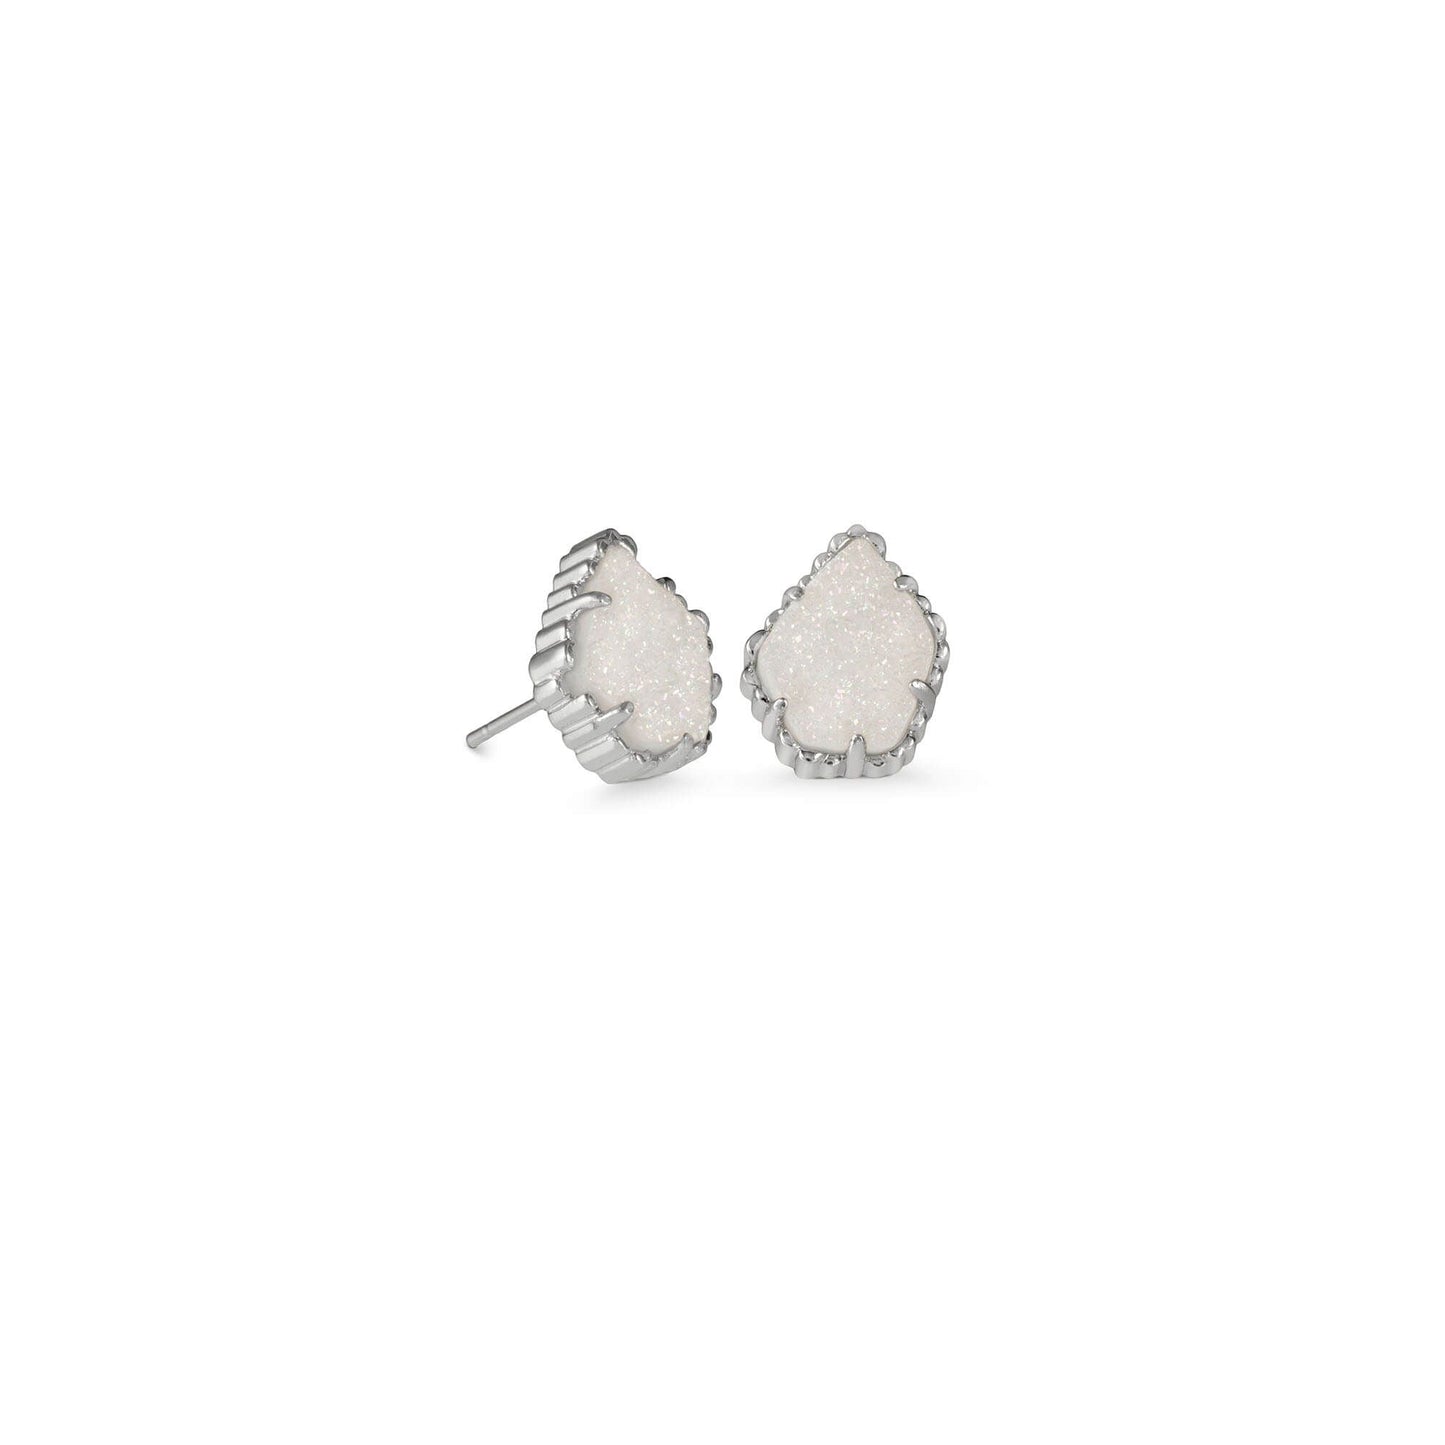 Tessa Stud Earrings in Rhodium Iridescent Drusy